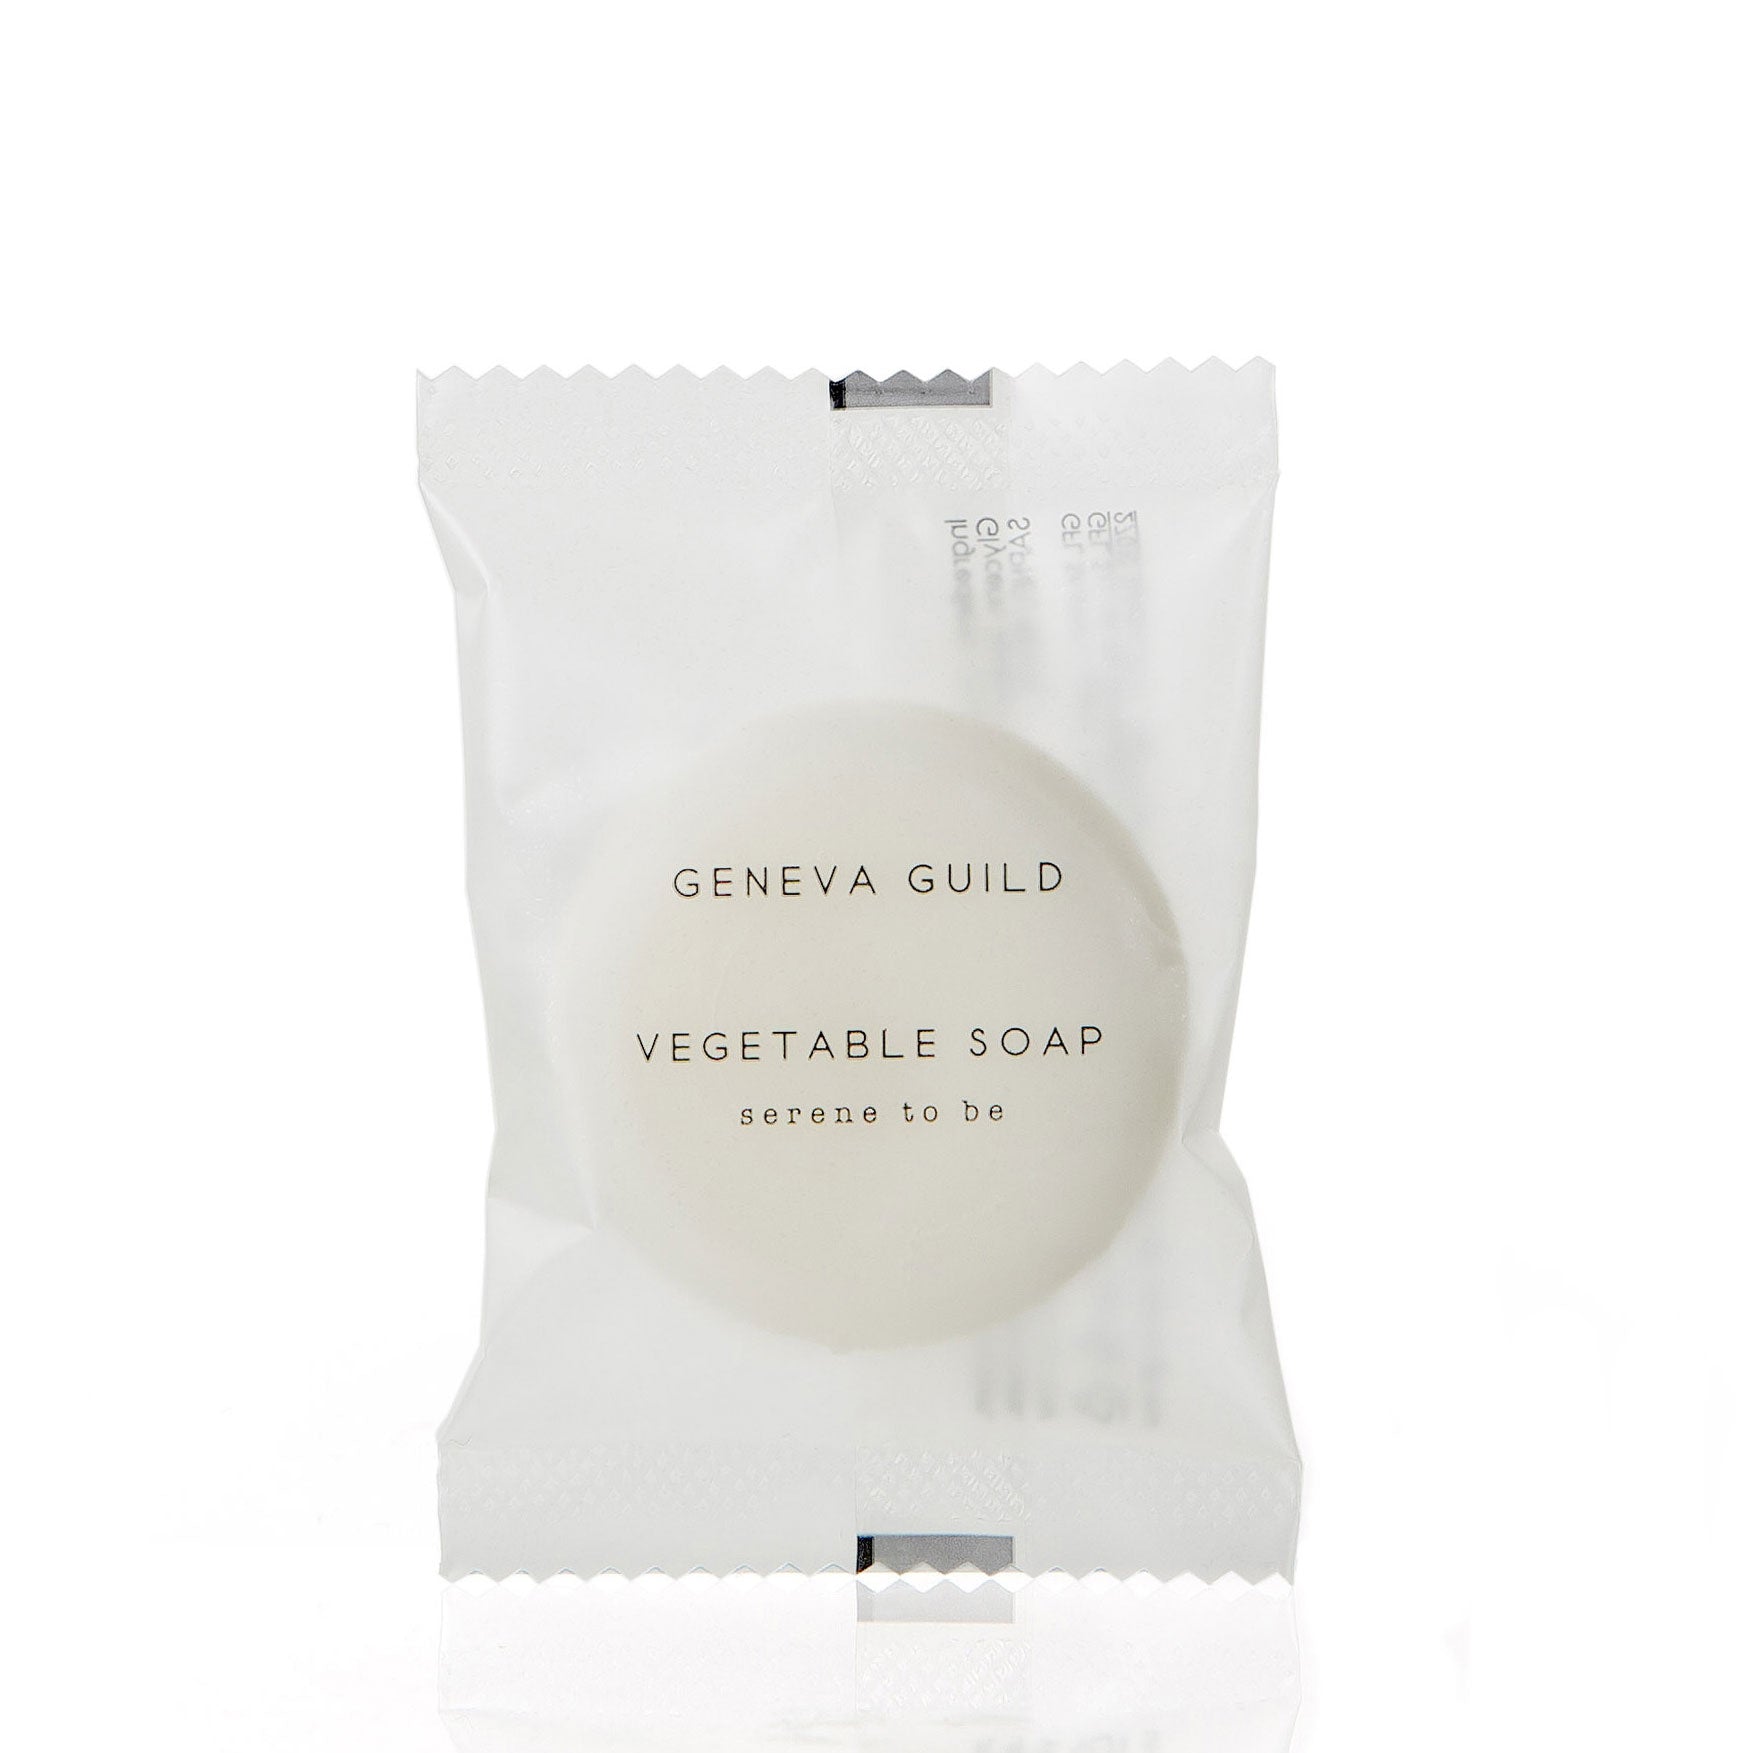 Geneva Guild 20 gram vegetable solid soap bar